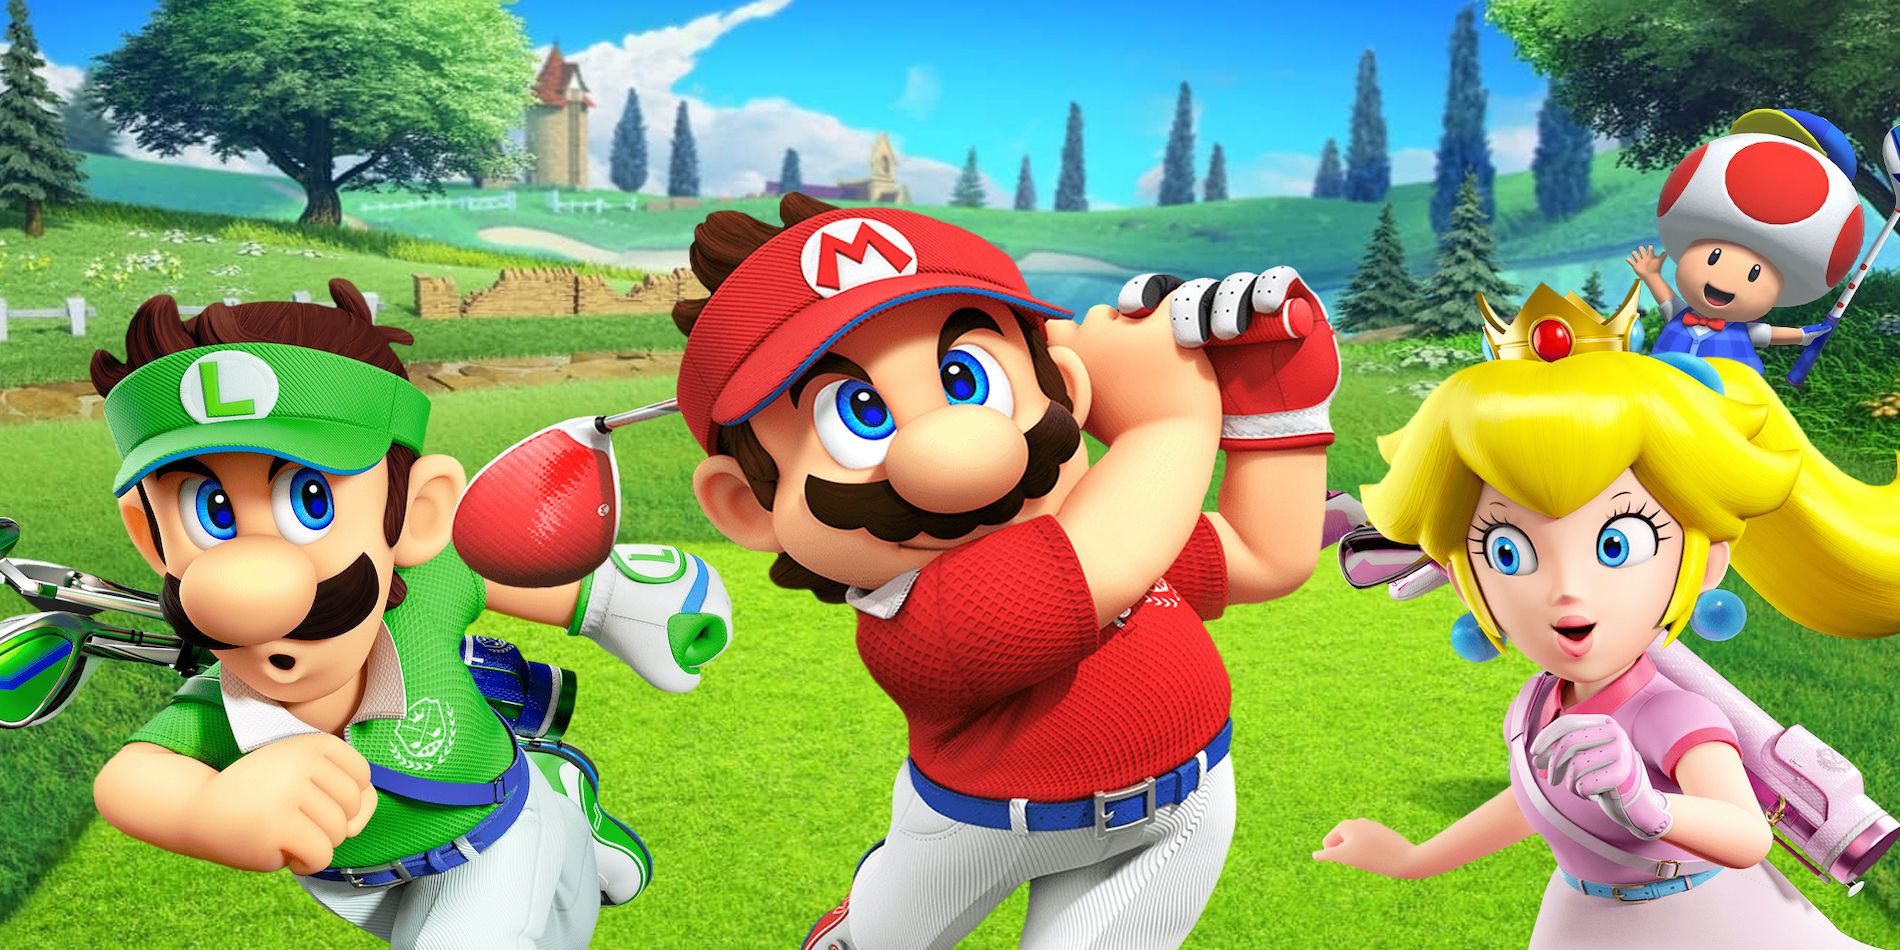 Mario, Luigi, Toad, And Peach wielding golf clubs in a grassy golf field